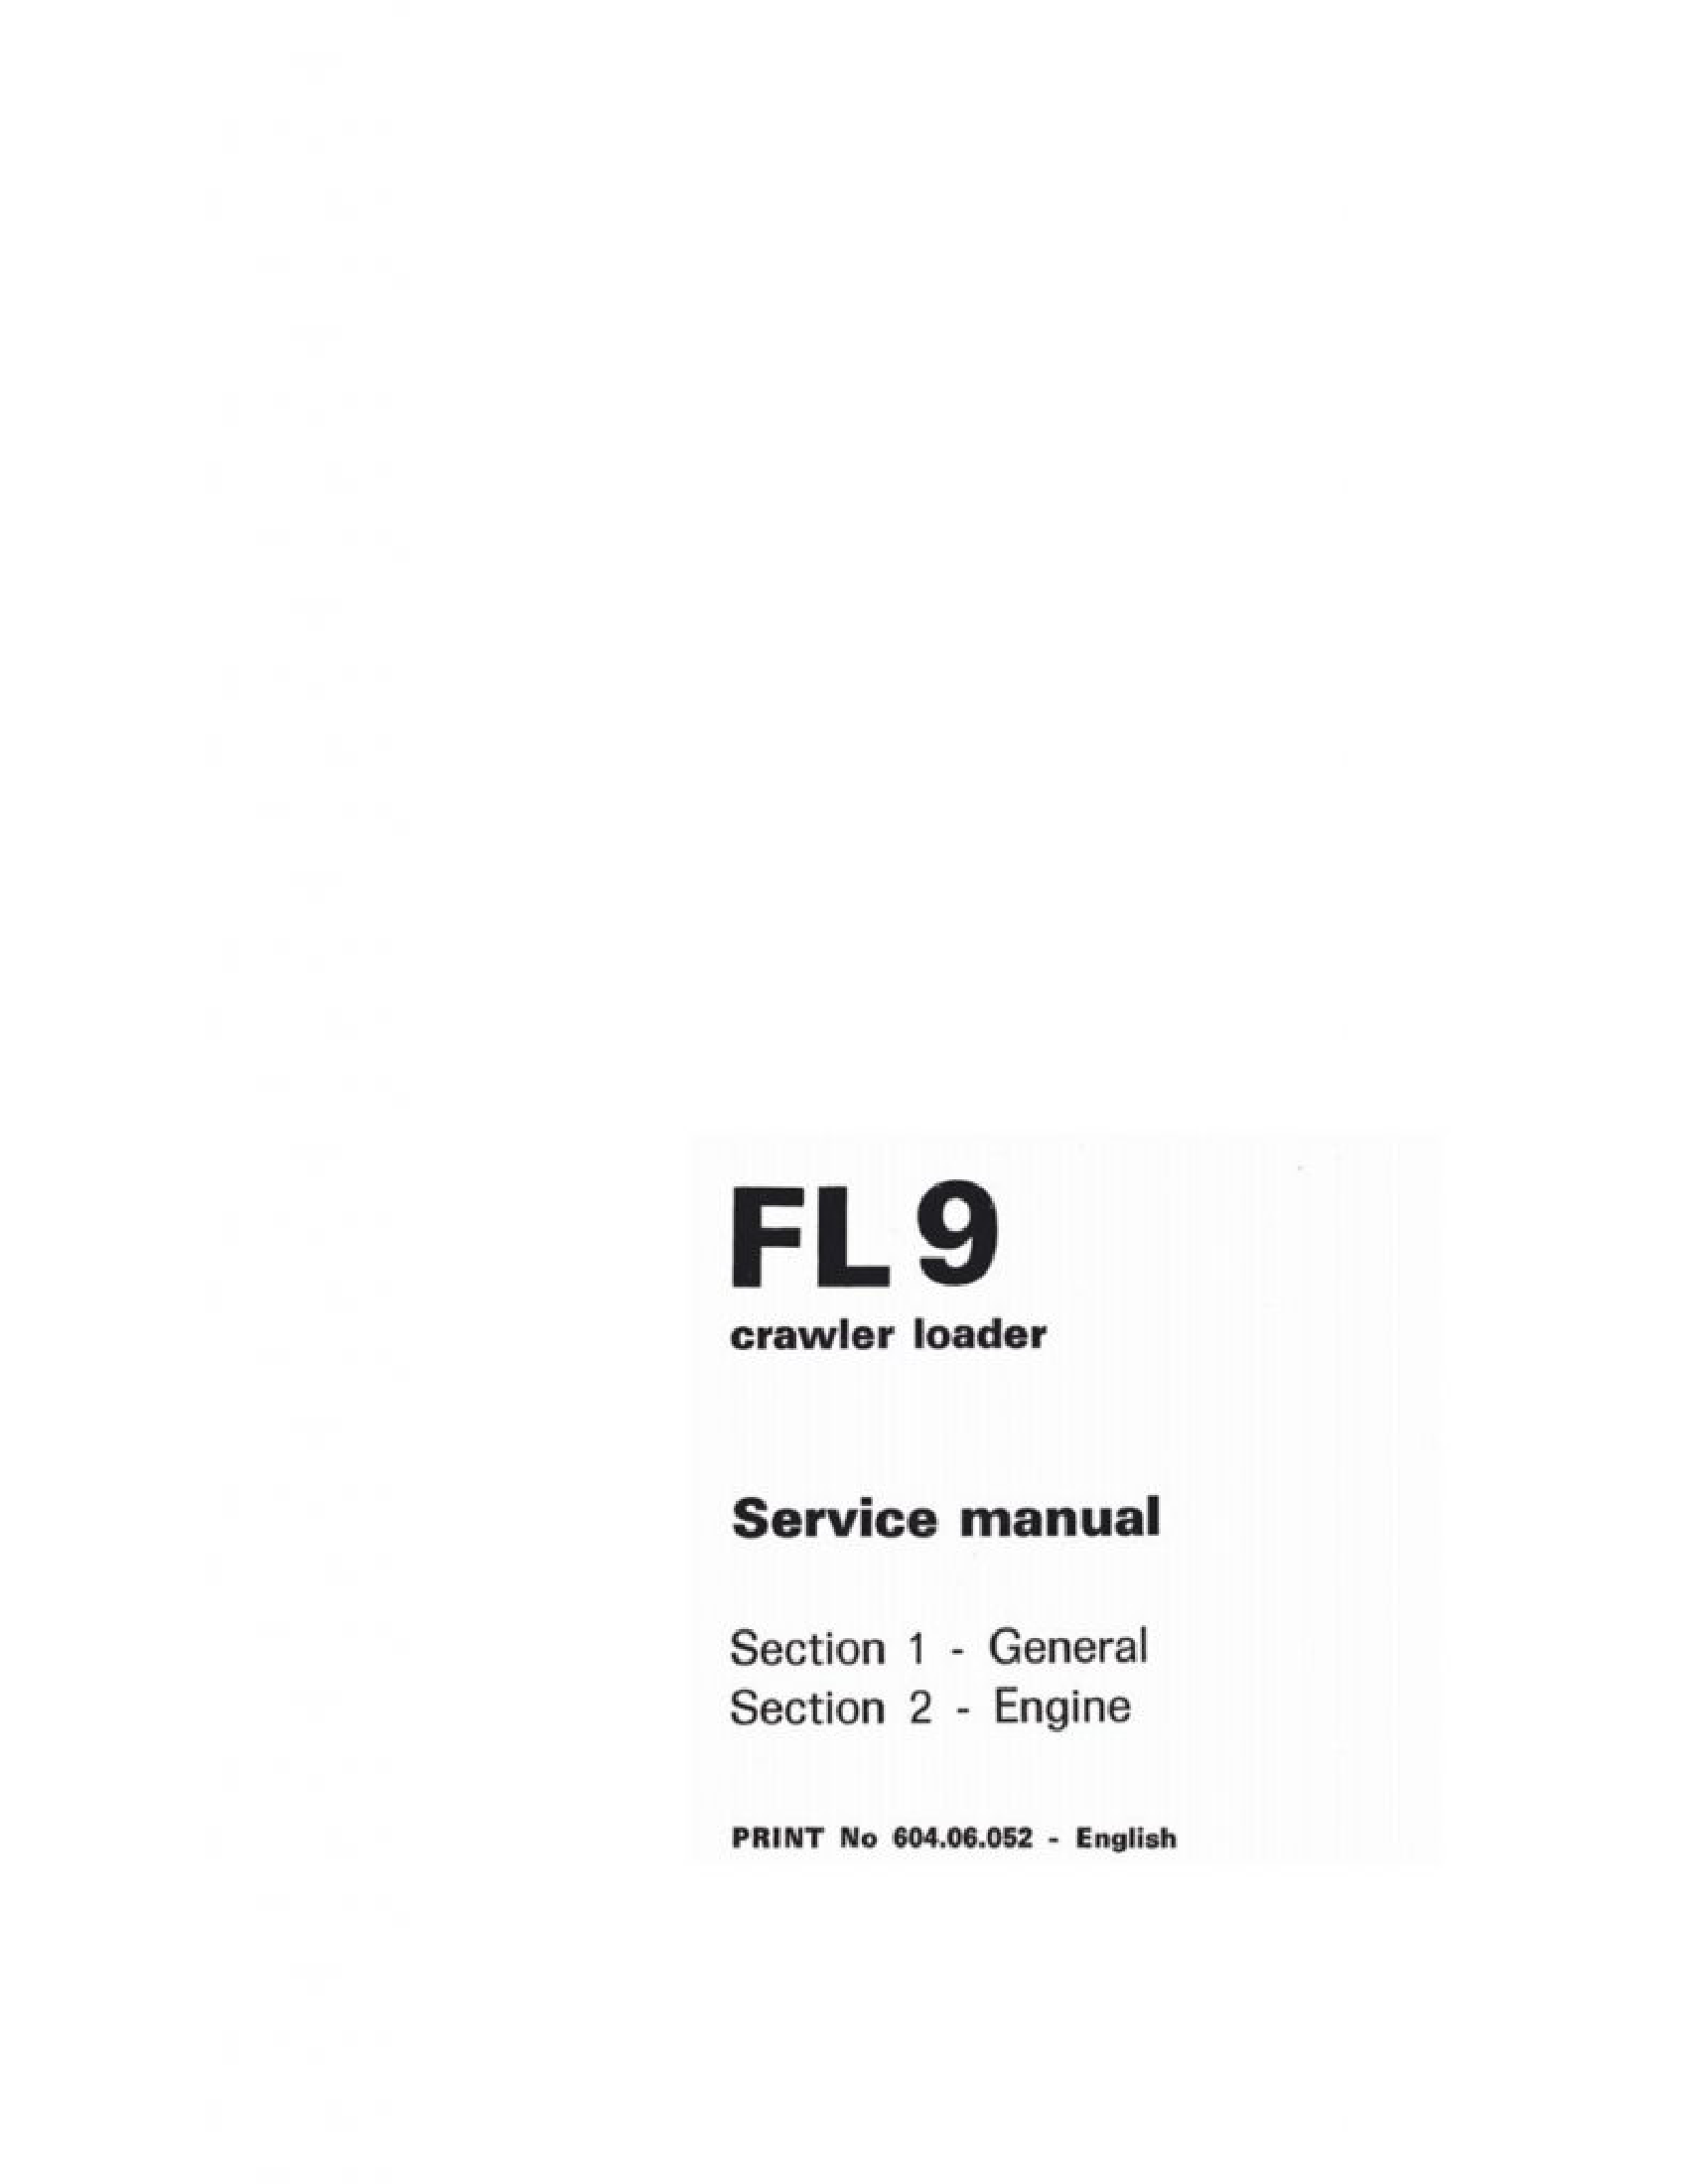 Fiat-Allis 9 FL Crawler Loader manual